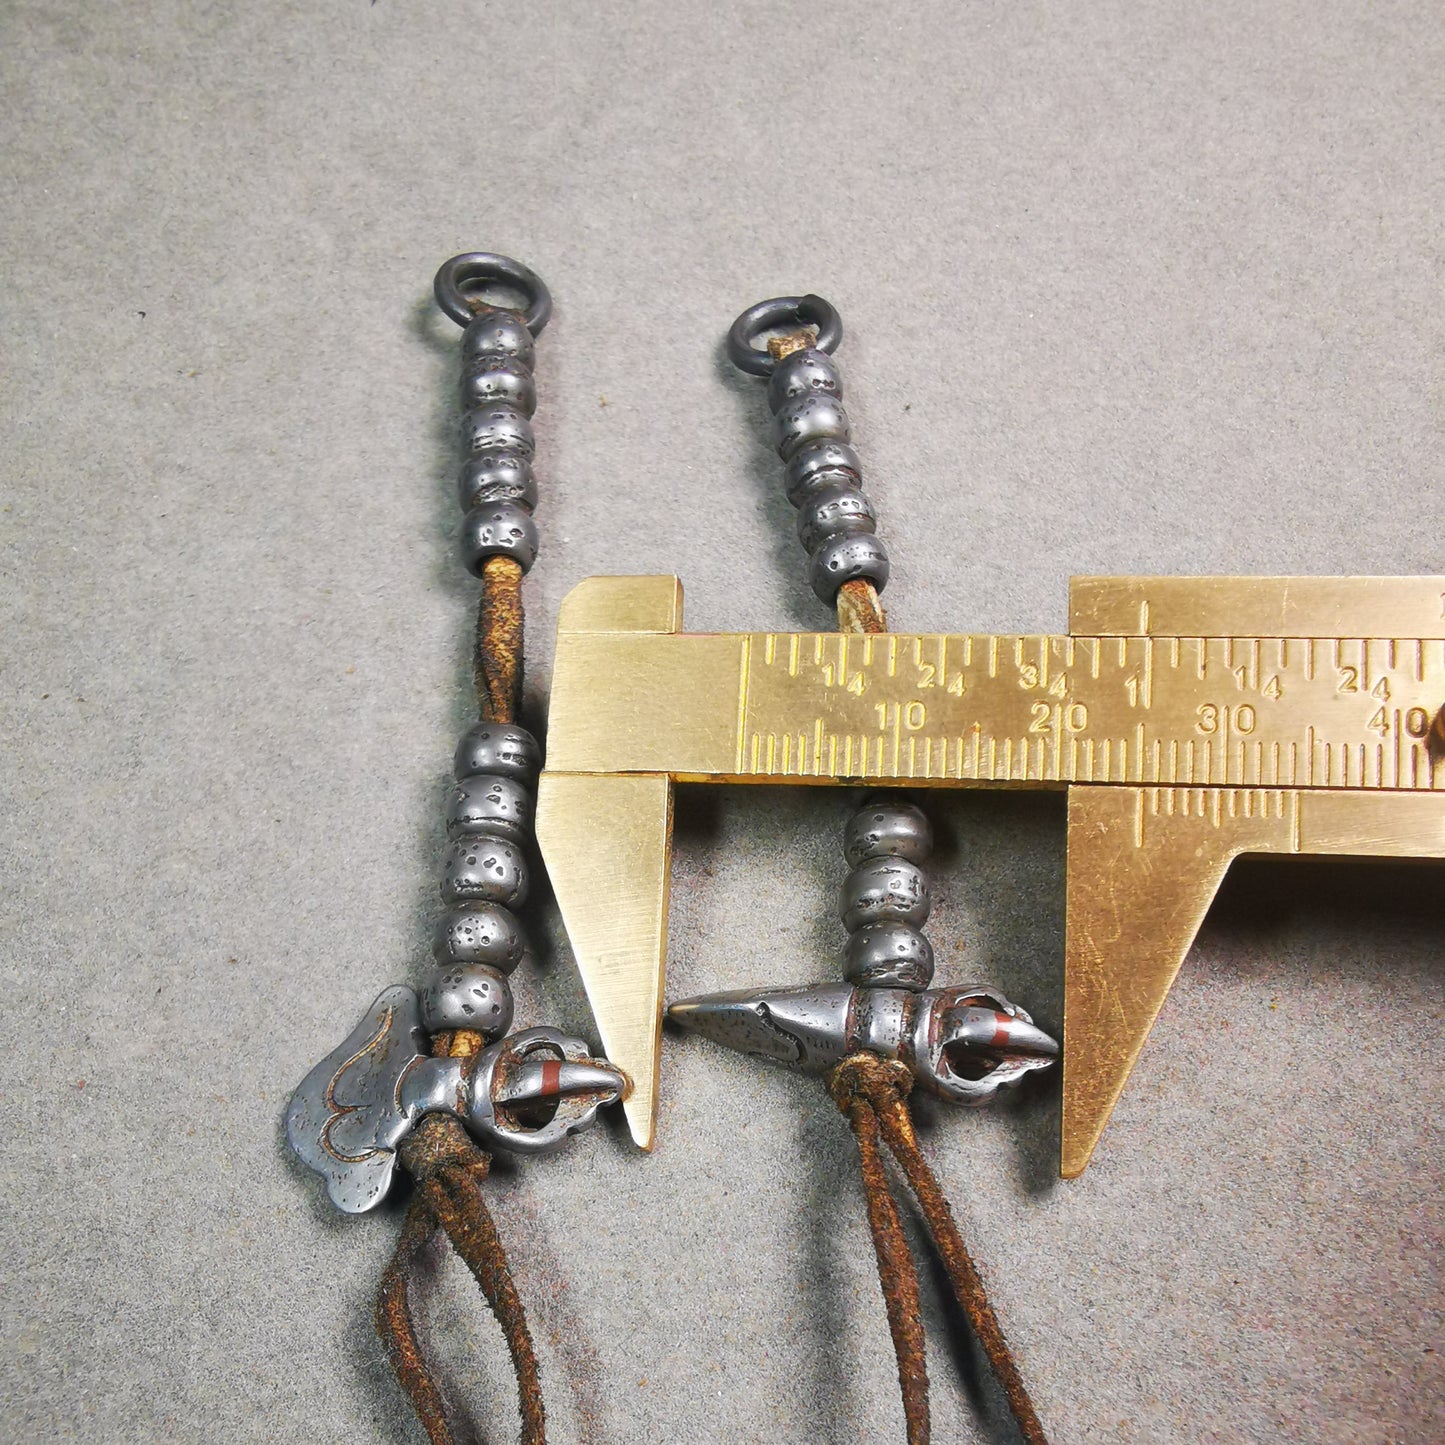 6mm Cold Iron Bead Counters with Kila and Kartika Pendant